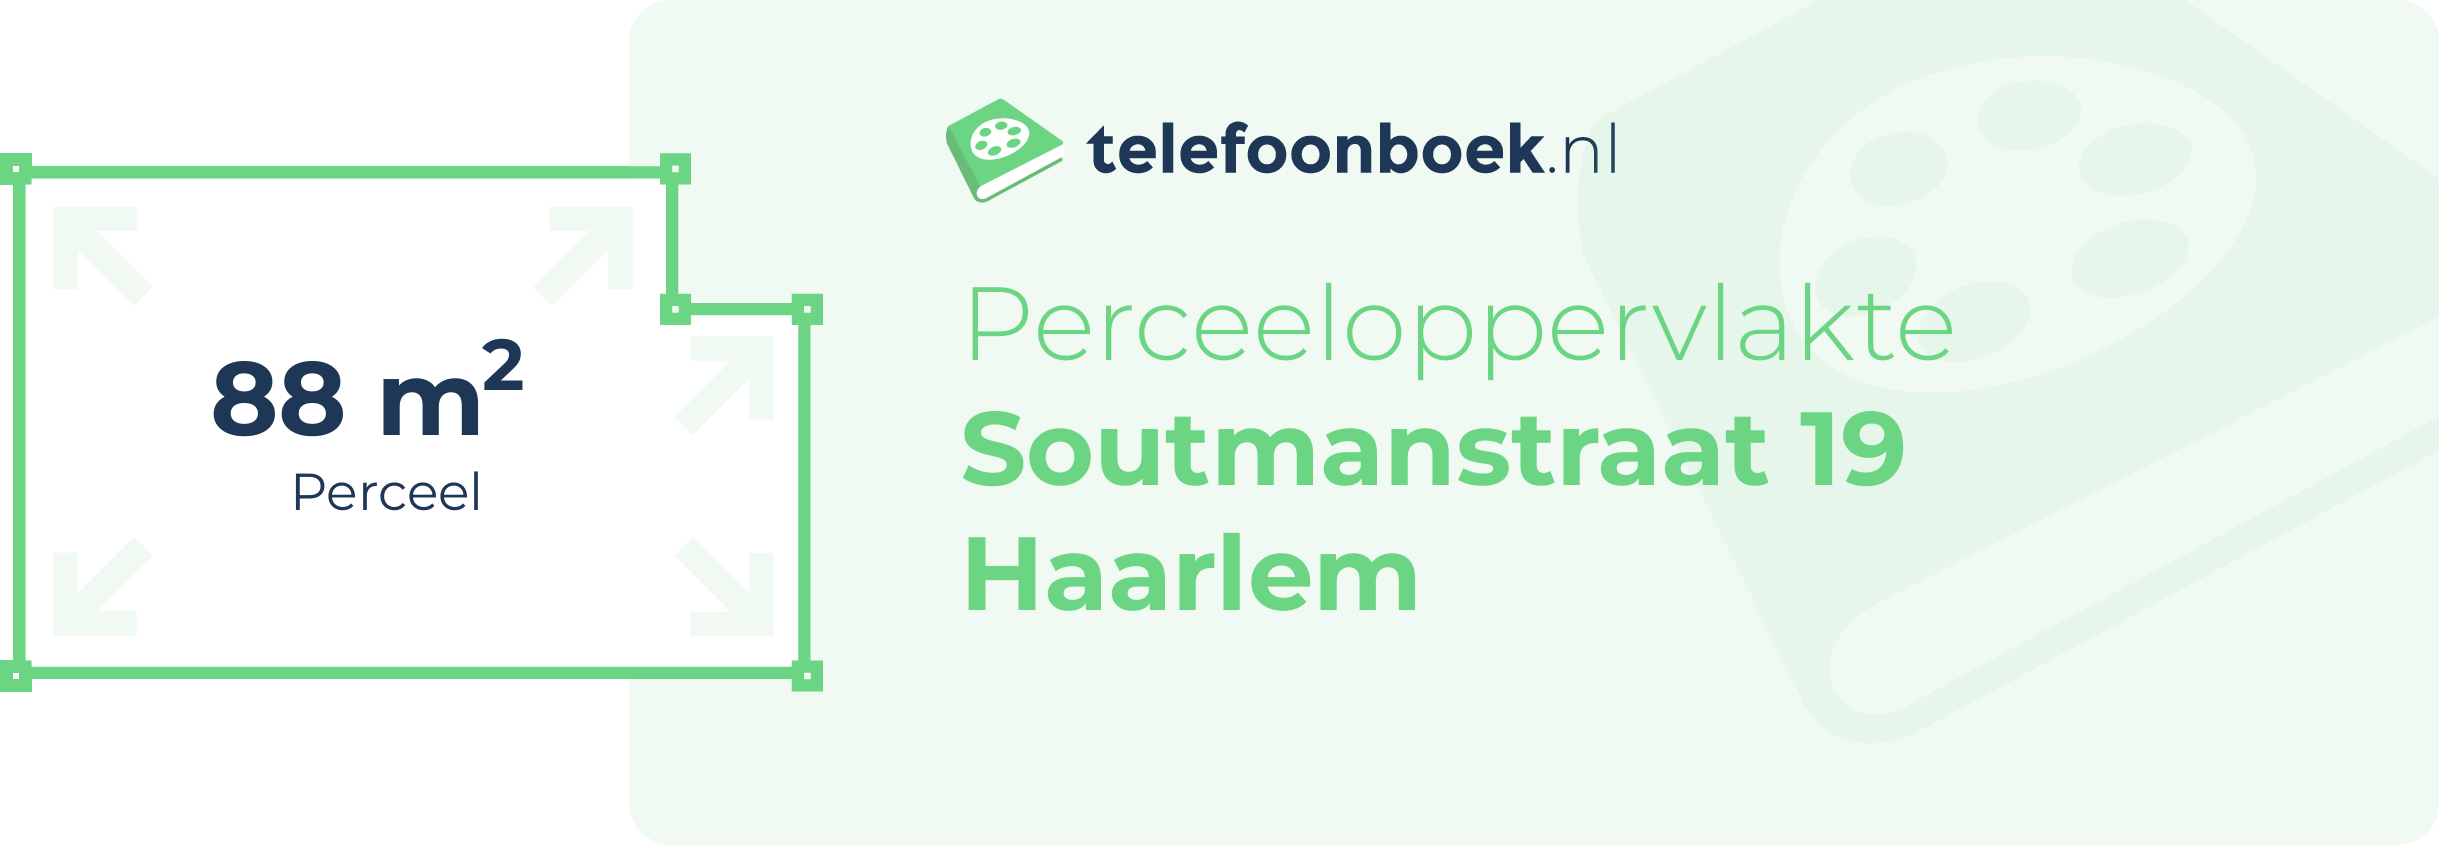 Perceeloppervlakte Soutmanstraat 19 Haarlem